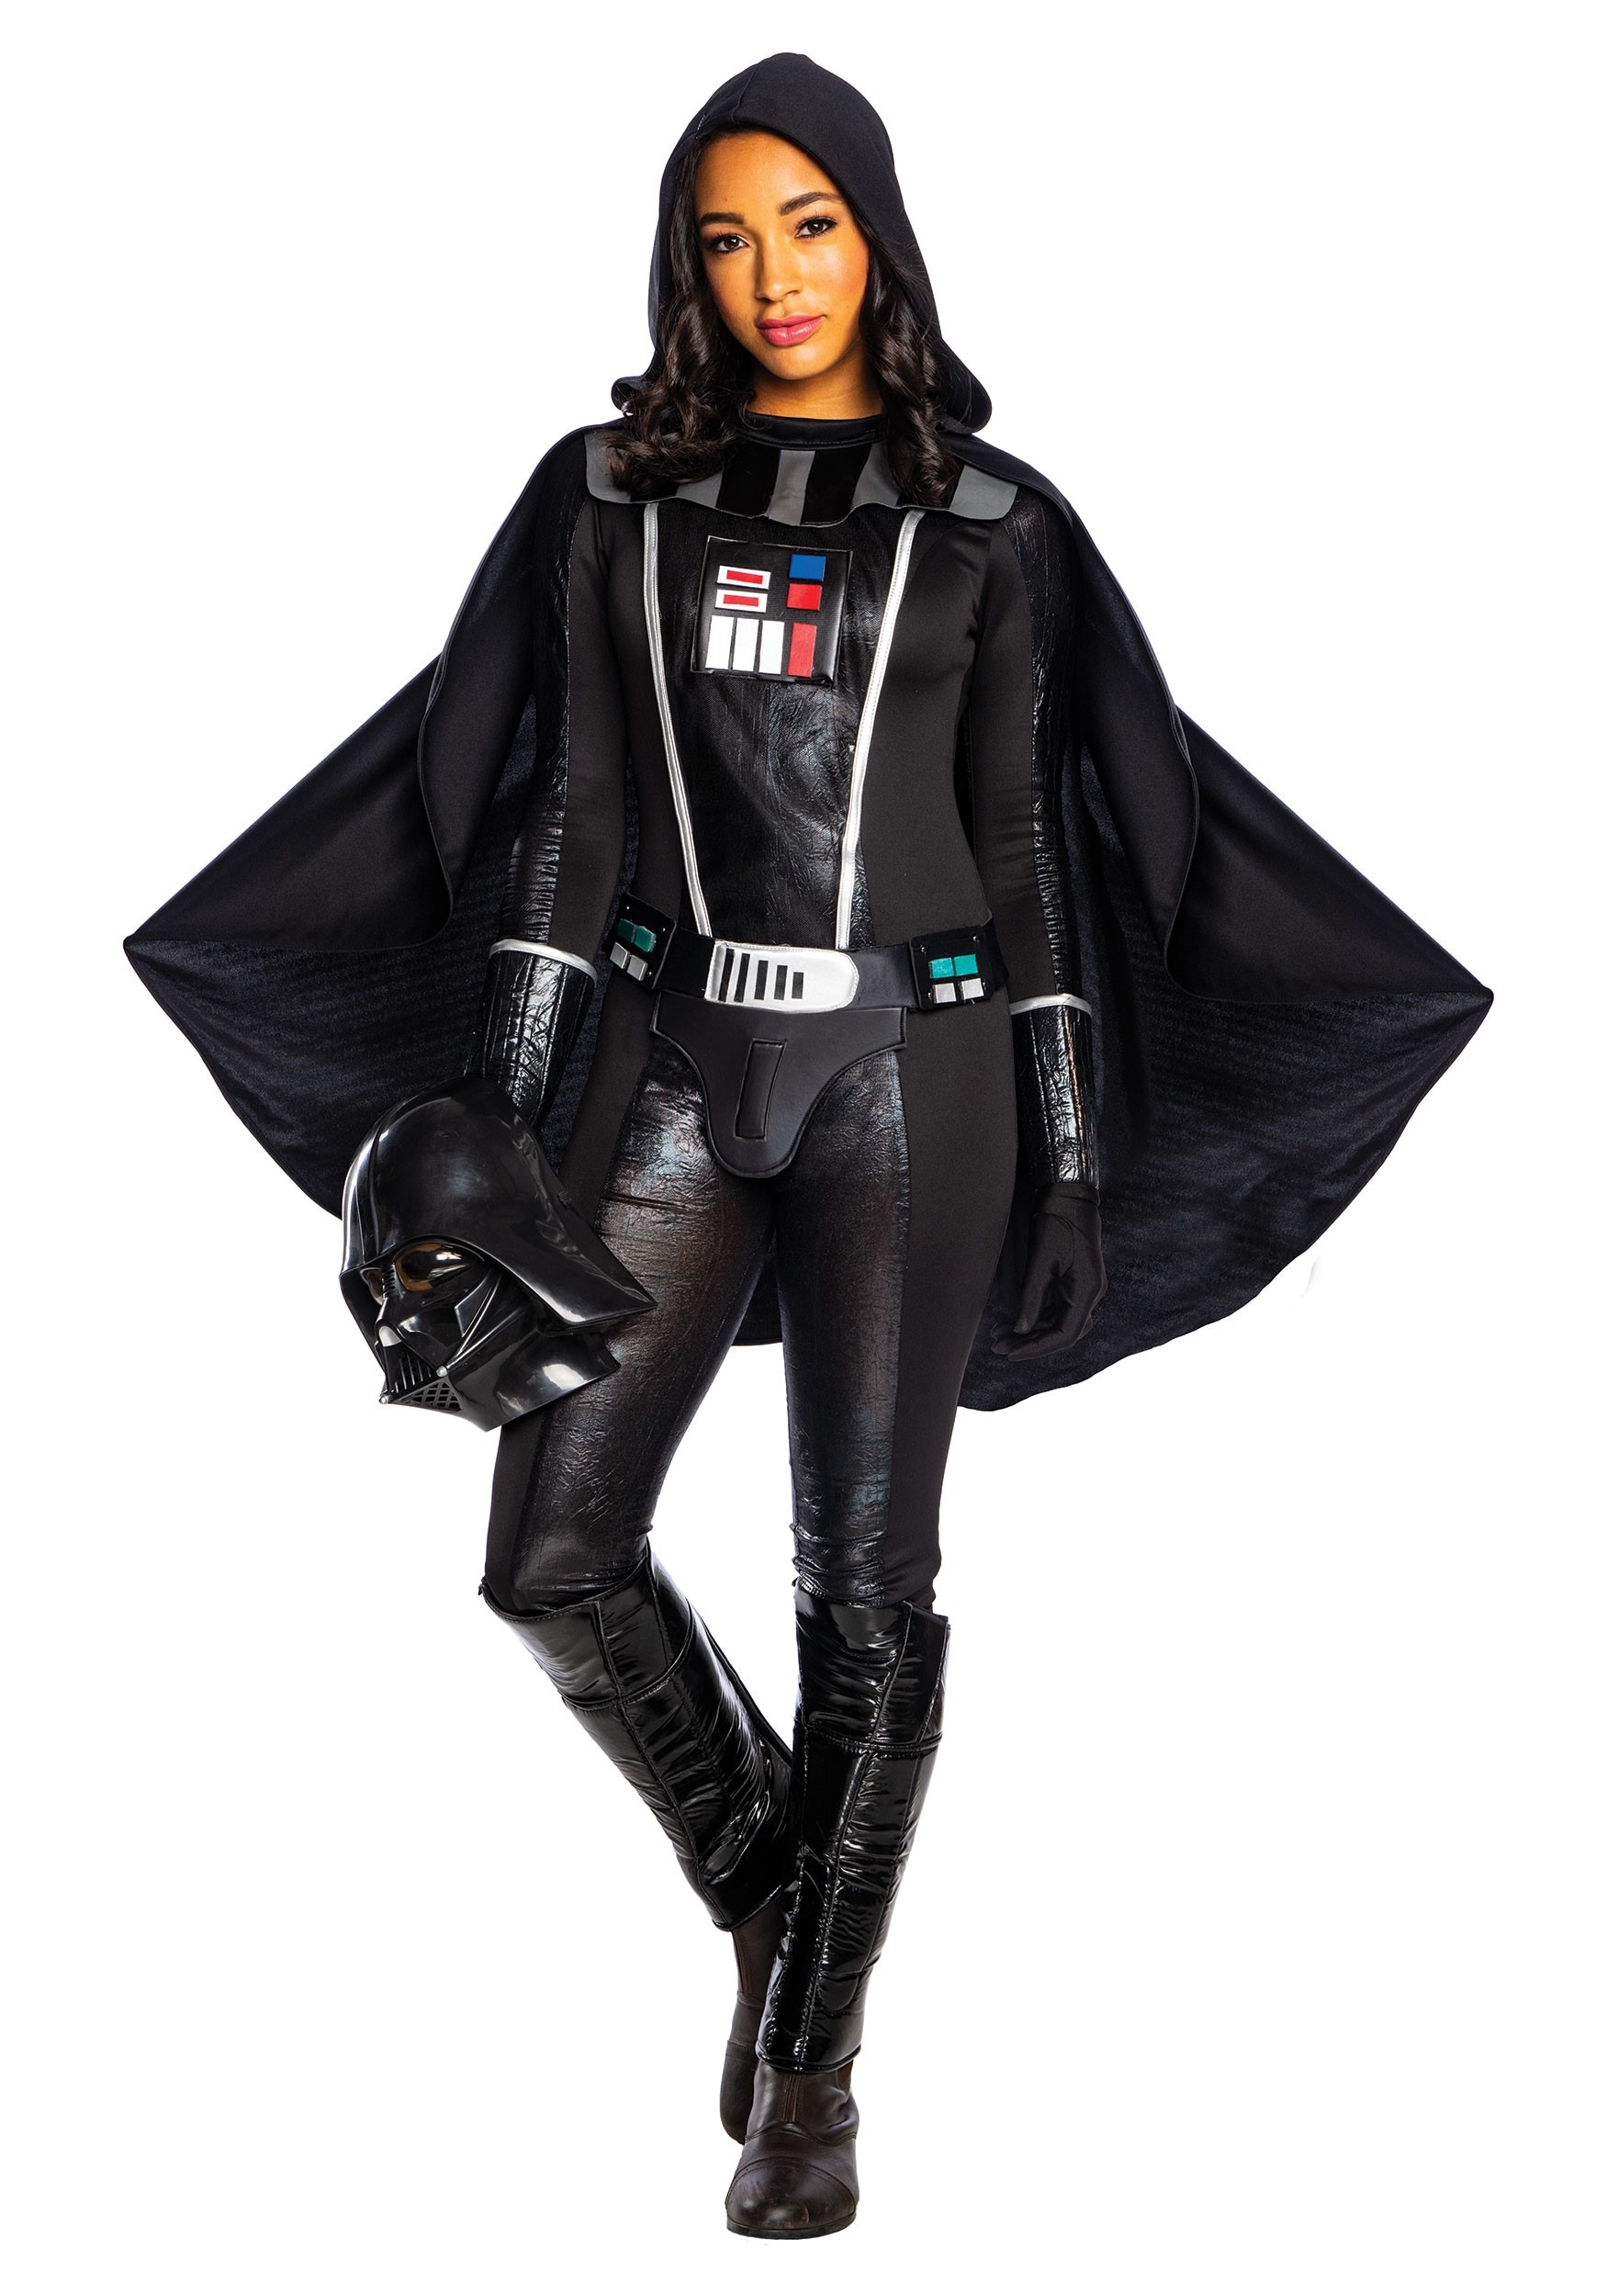 Star Wars Darth Vader Womens Costume